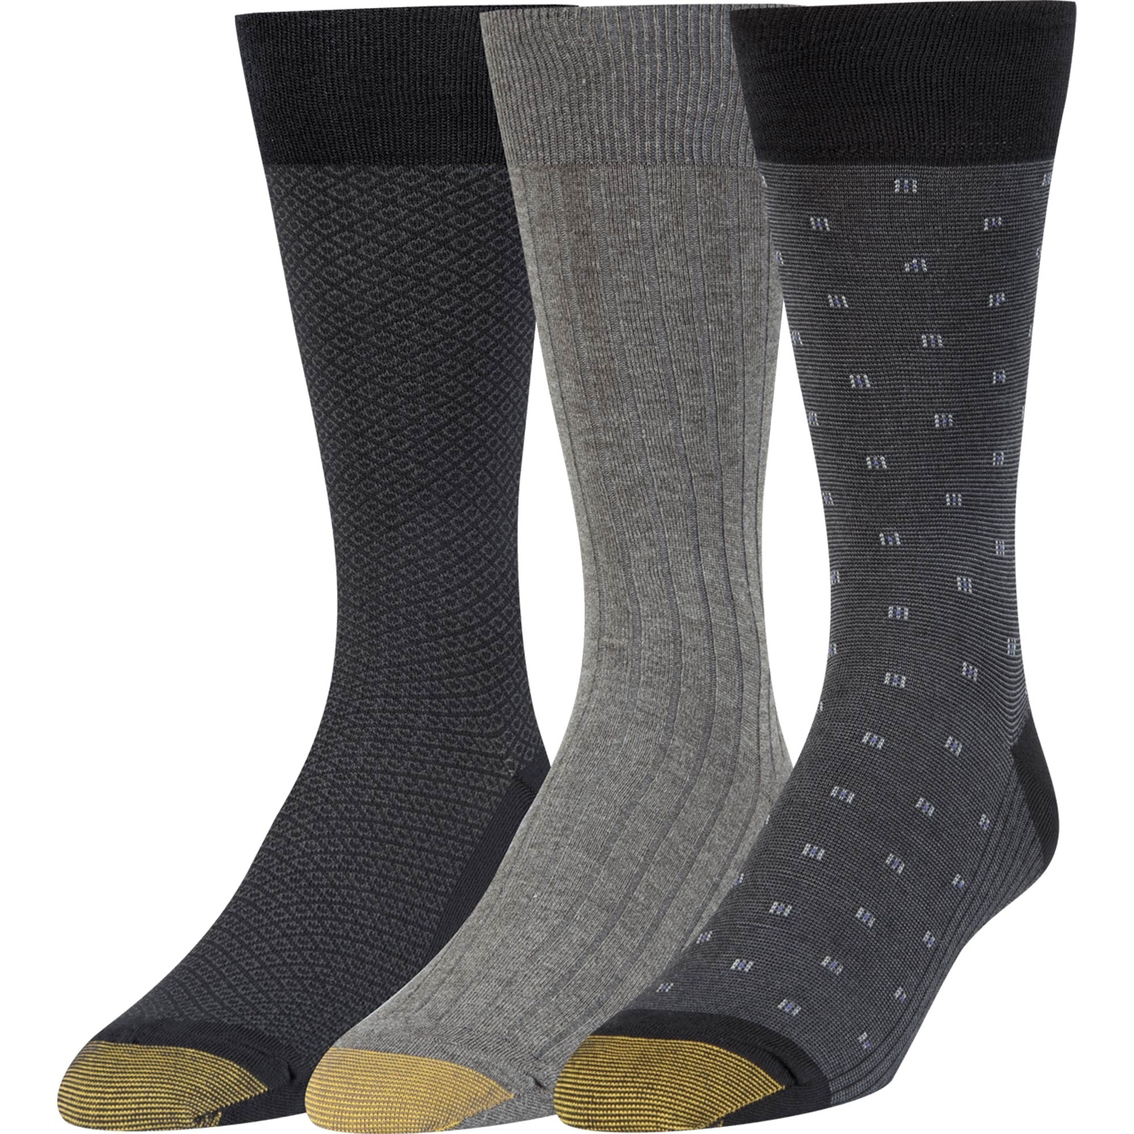 Gold Toe Premium Soft Rayon Dress Socks 3 Pk. | Socks | Clothing ...